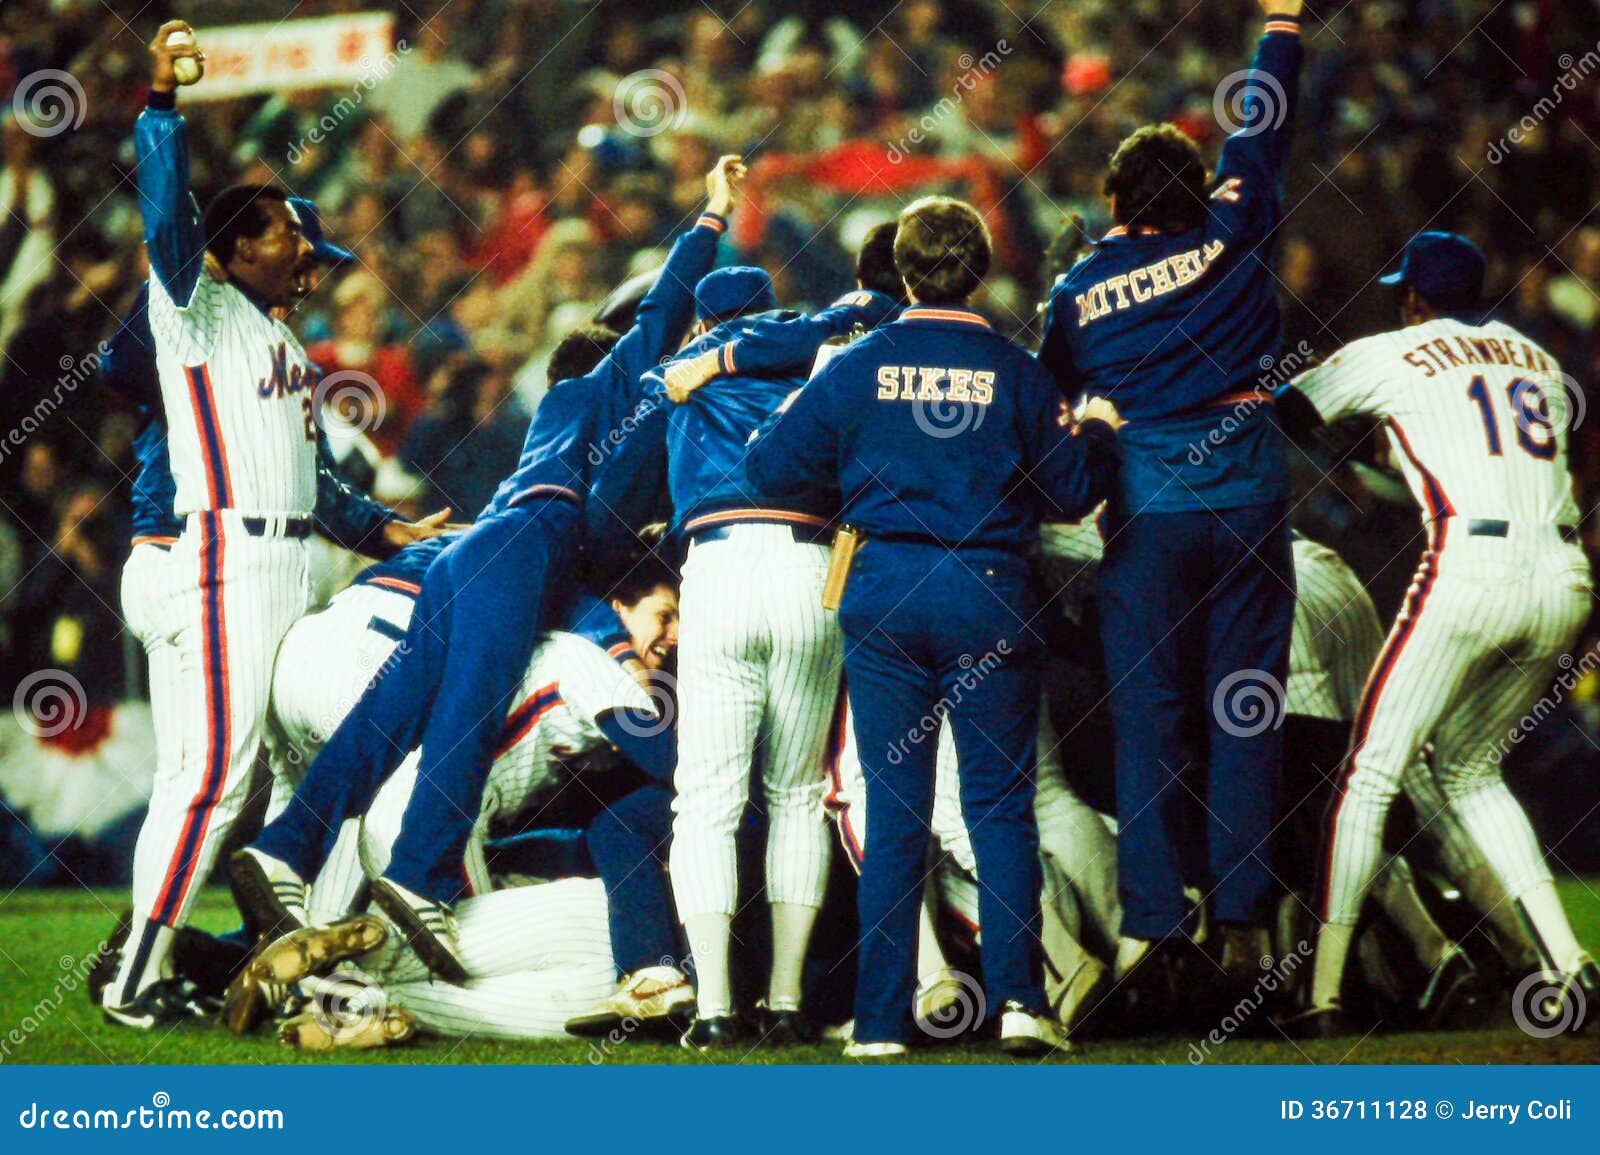 86 World Series Celebration Editorial Stock Photo - Image of game,  baseball: 36711128